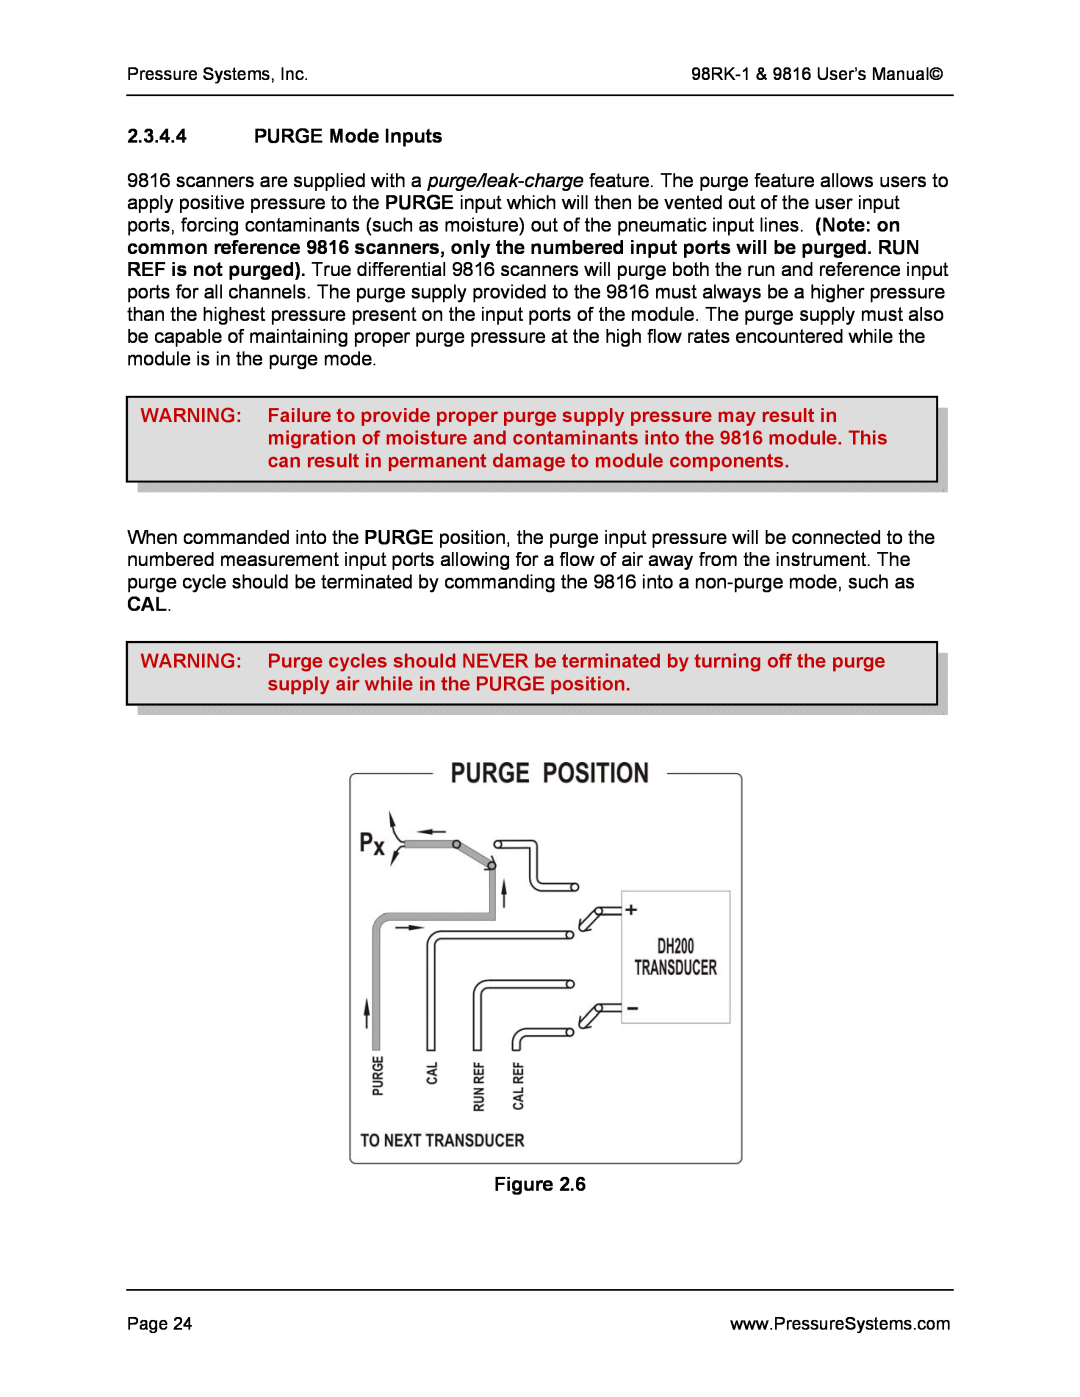 Pressure Systems 98RK-1 user manual PURGE Mode Inputs 